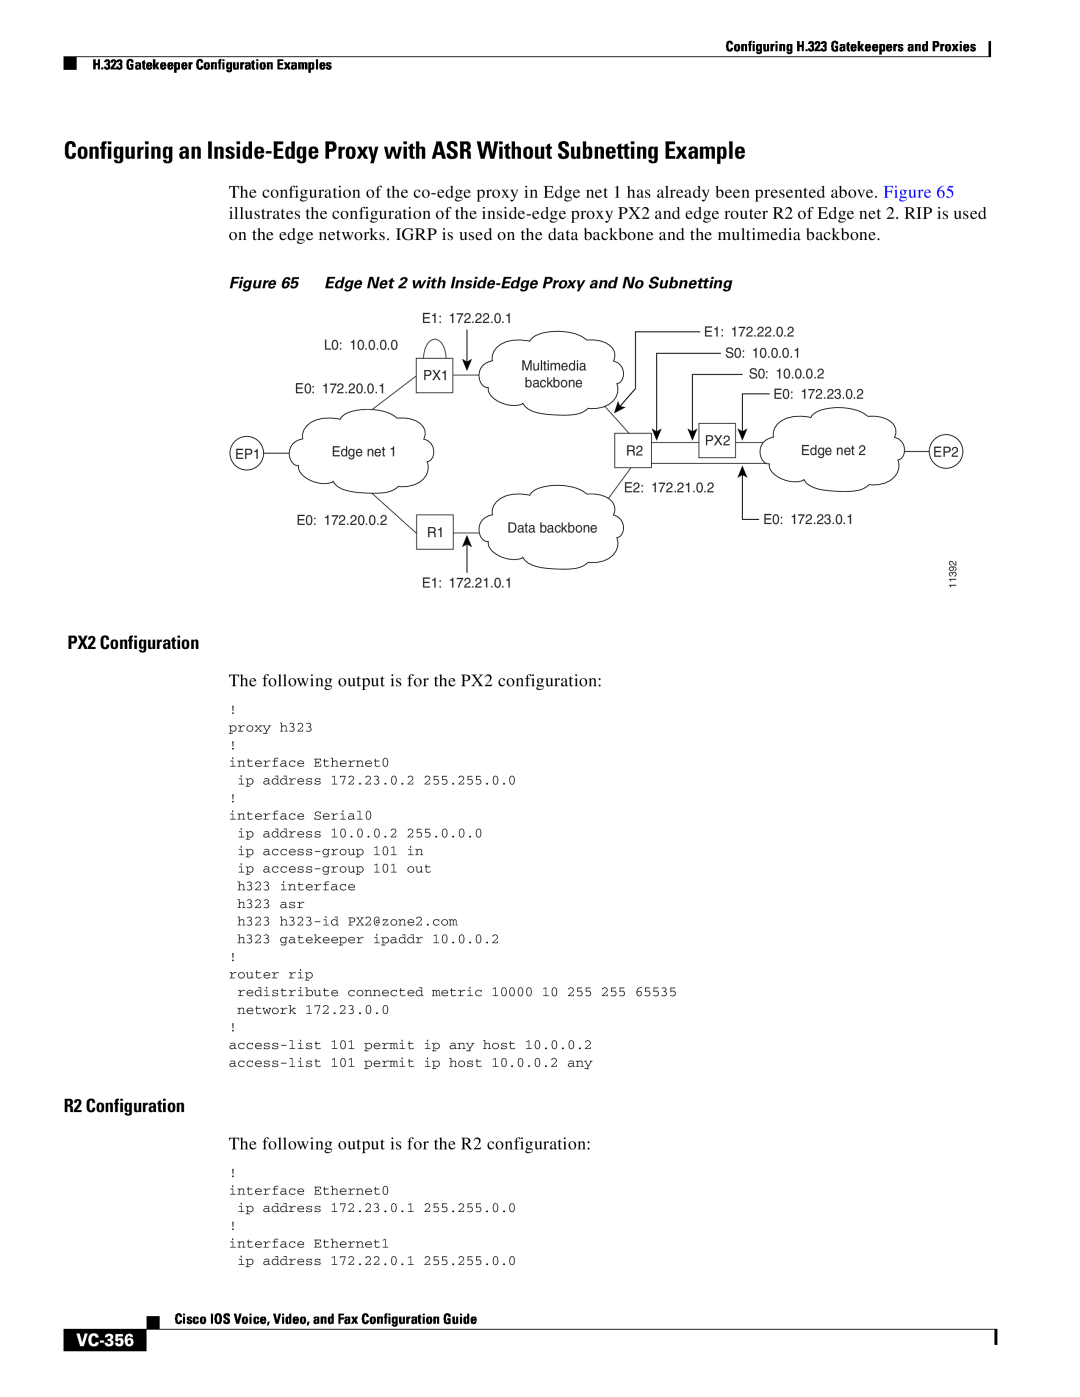 Cisco Systems VC-289 manual PX2 Configuration, R2 Configuration, VC-356 